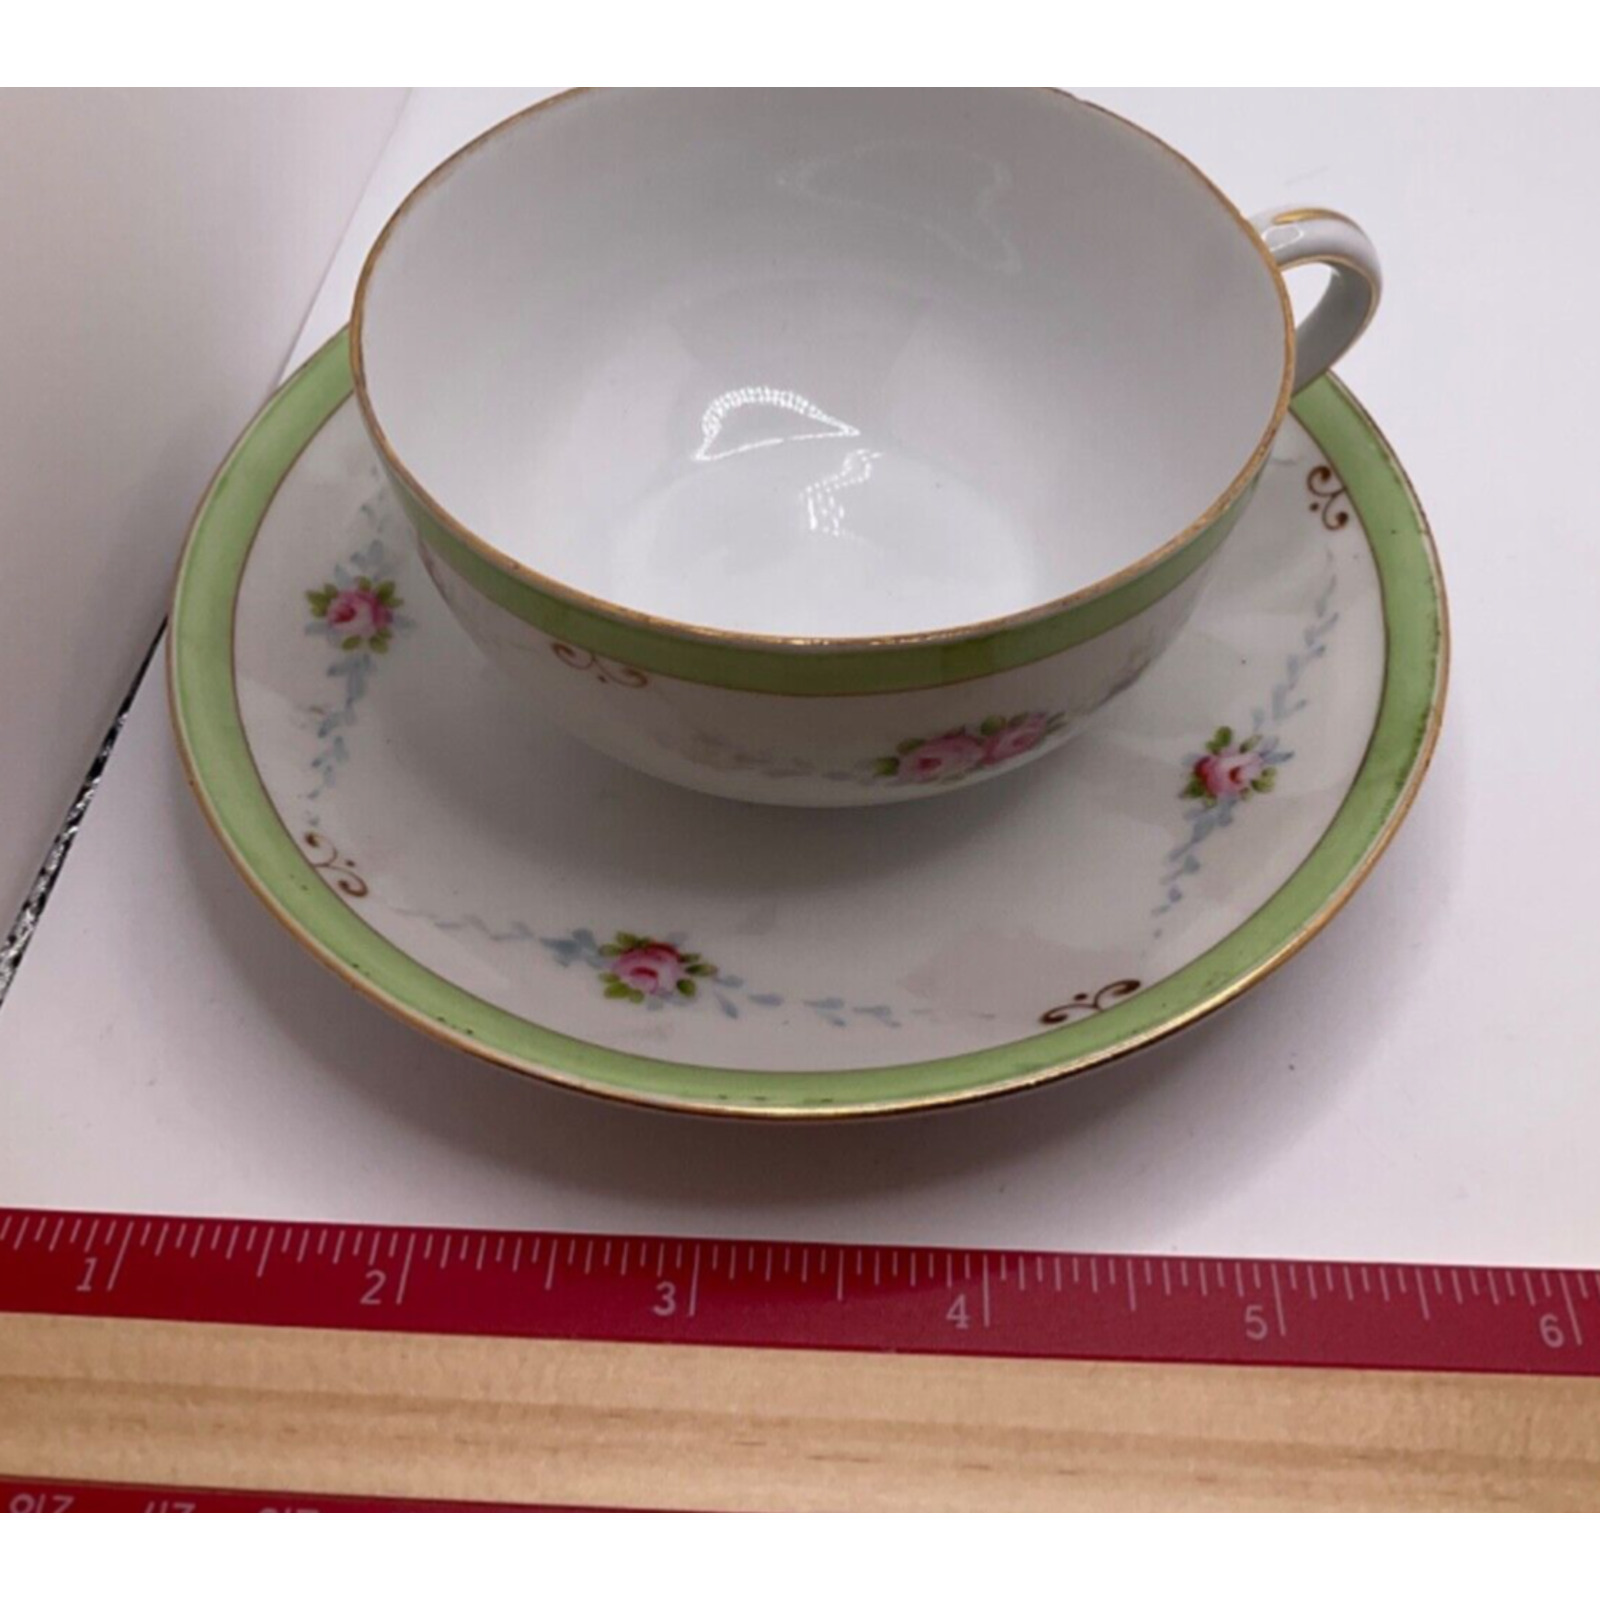 Vintage Japanese Tea Cup & Saucer Set - Hand-Painted Floral, Delicate Design